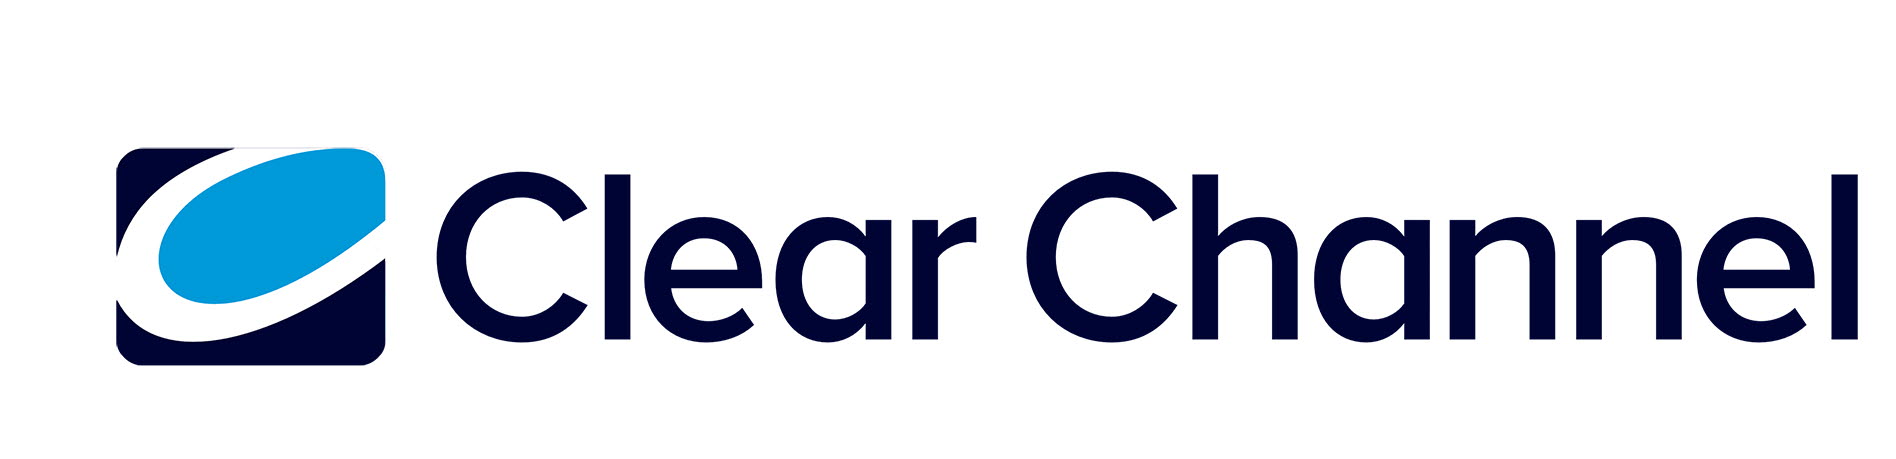 Clear channel logo